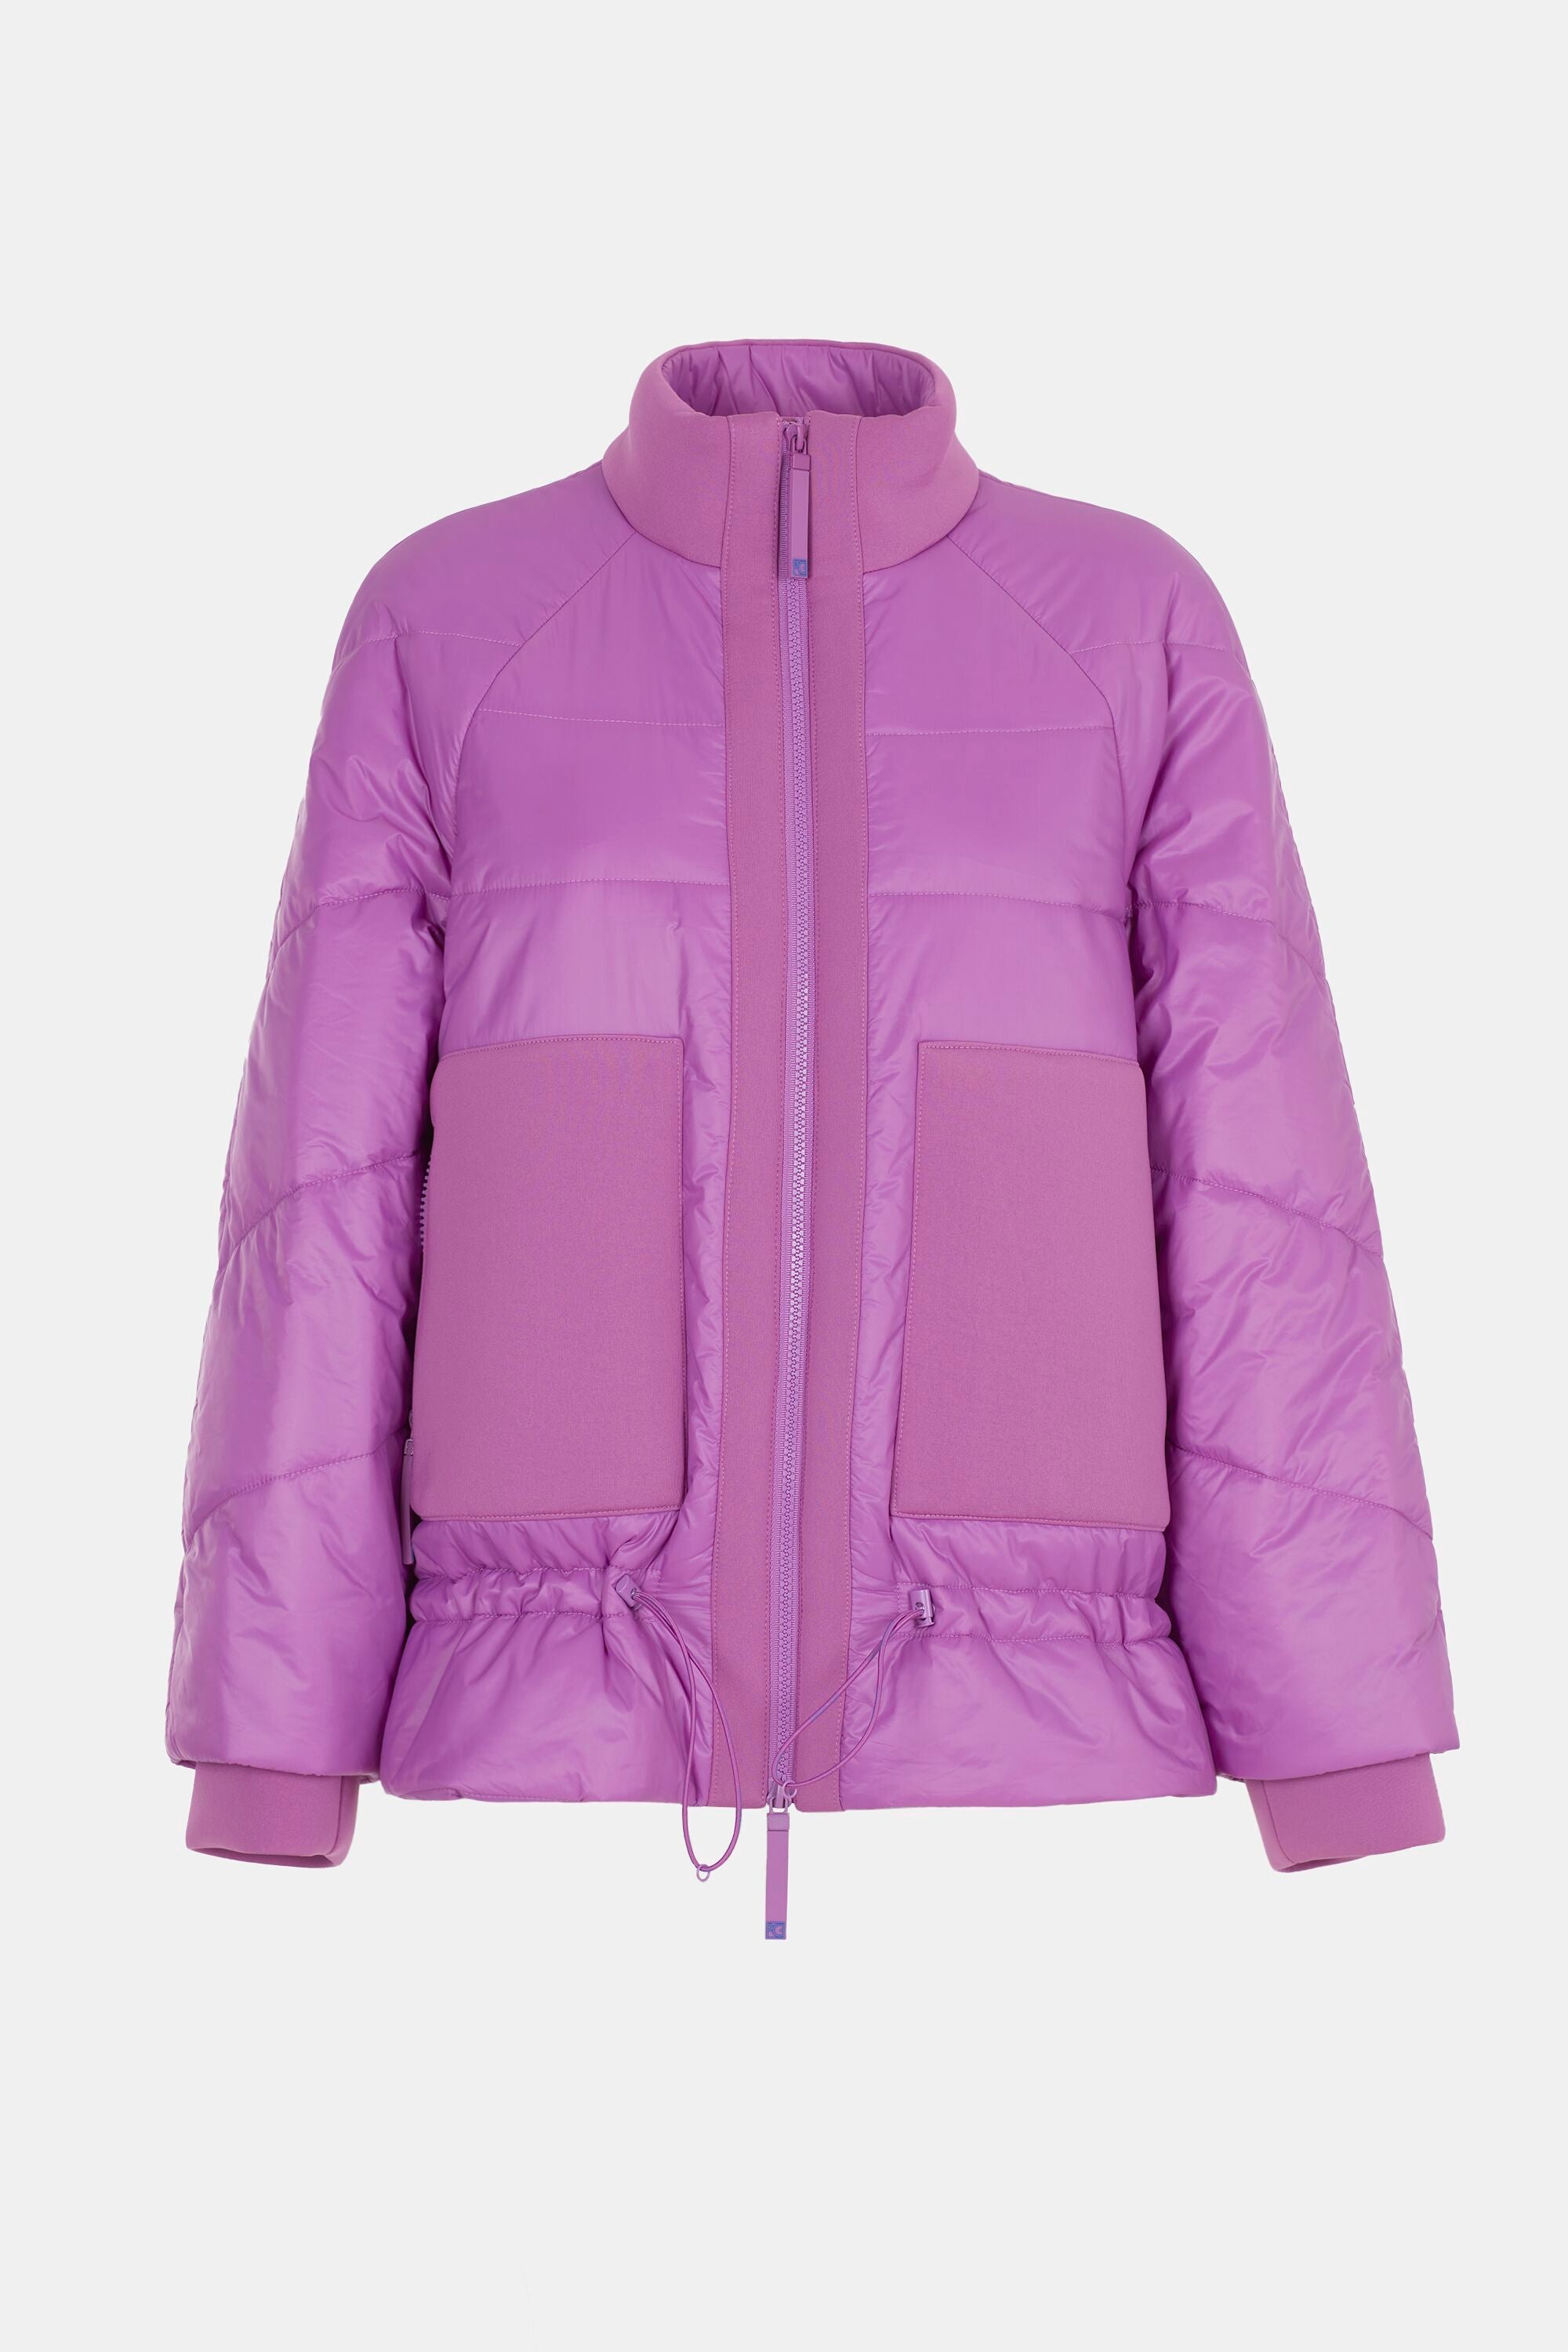 neoprene - Purificacion Garcia pink Belgium and Cocoon nylon jacket